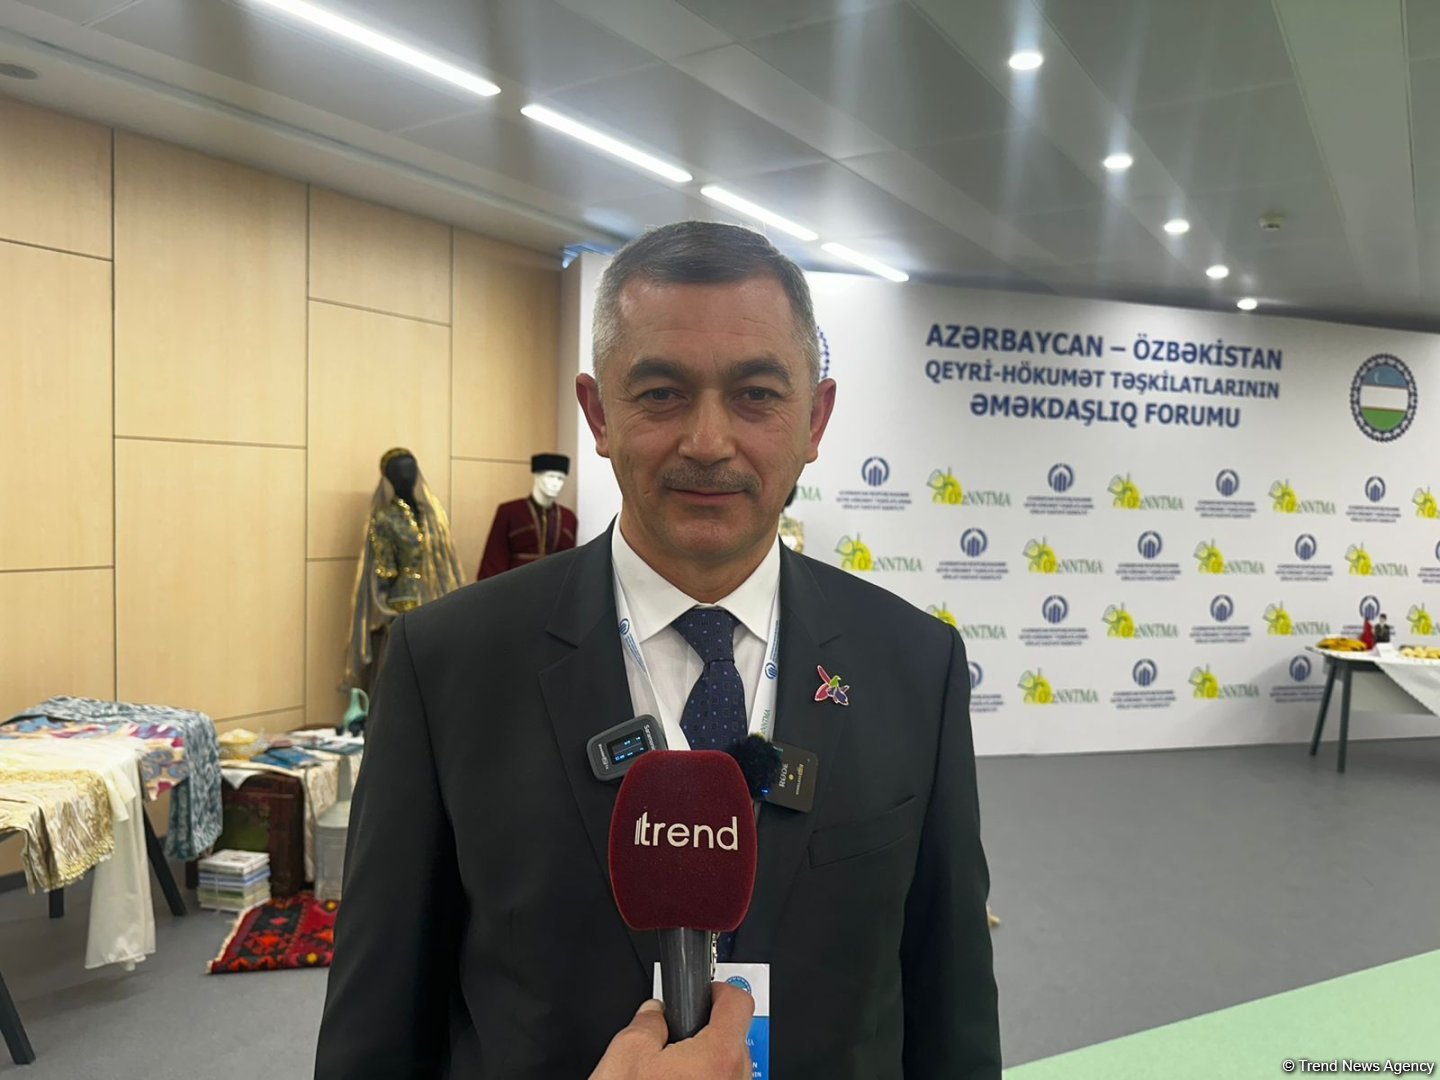 Азербайджан и Узбекистан укрепляют связи между НПО - председатель